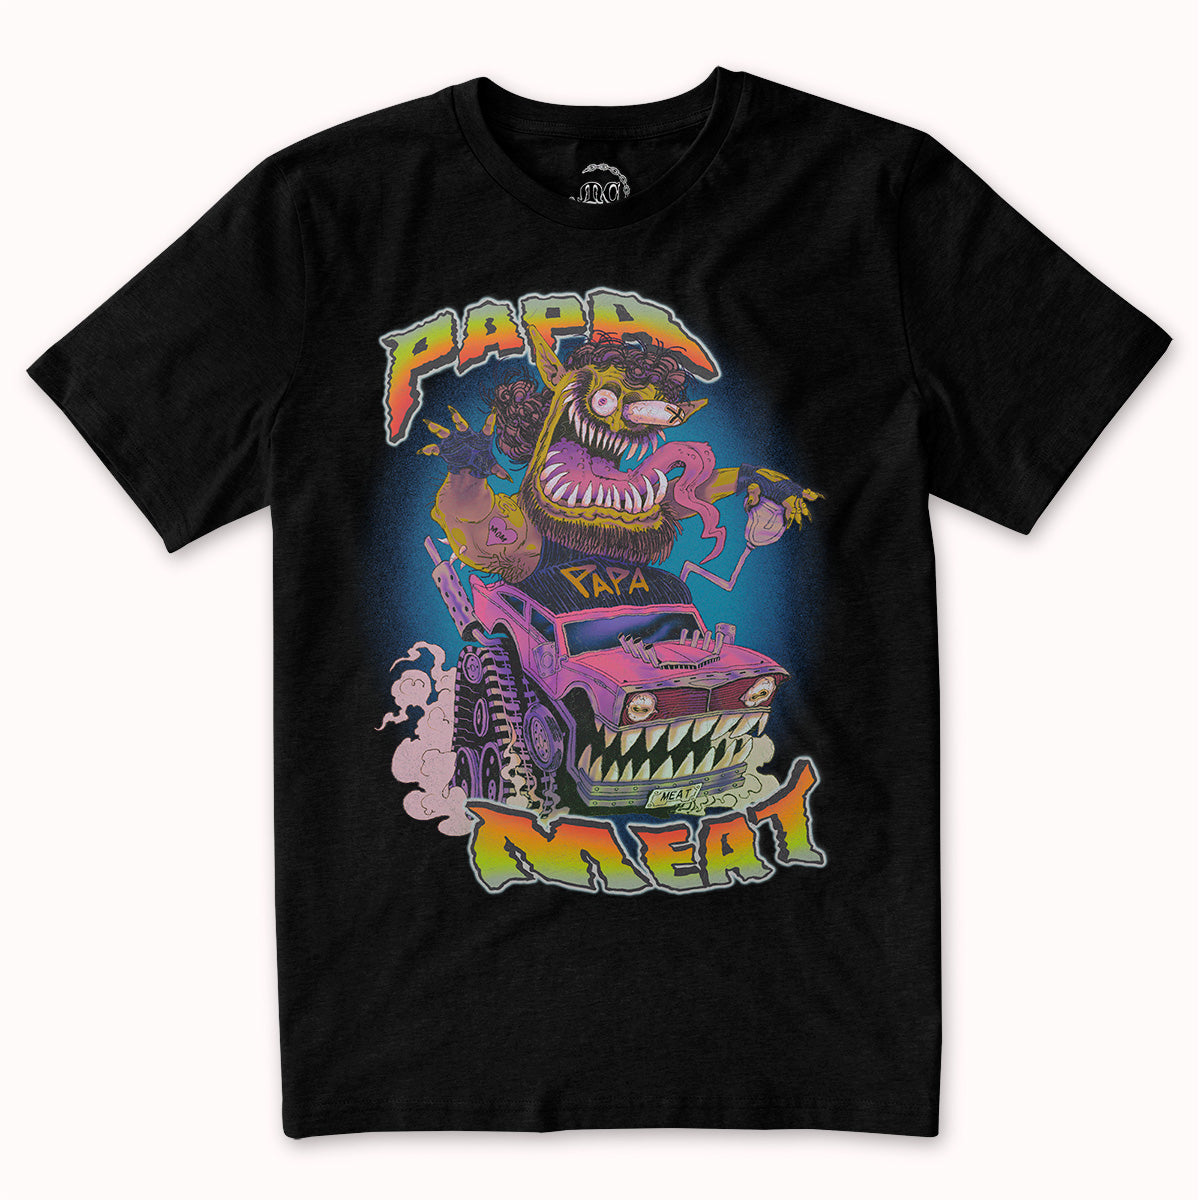 Papa Meat Grillhou5e T-Shirt